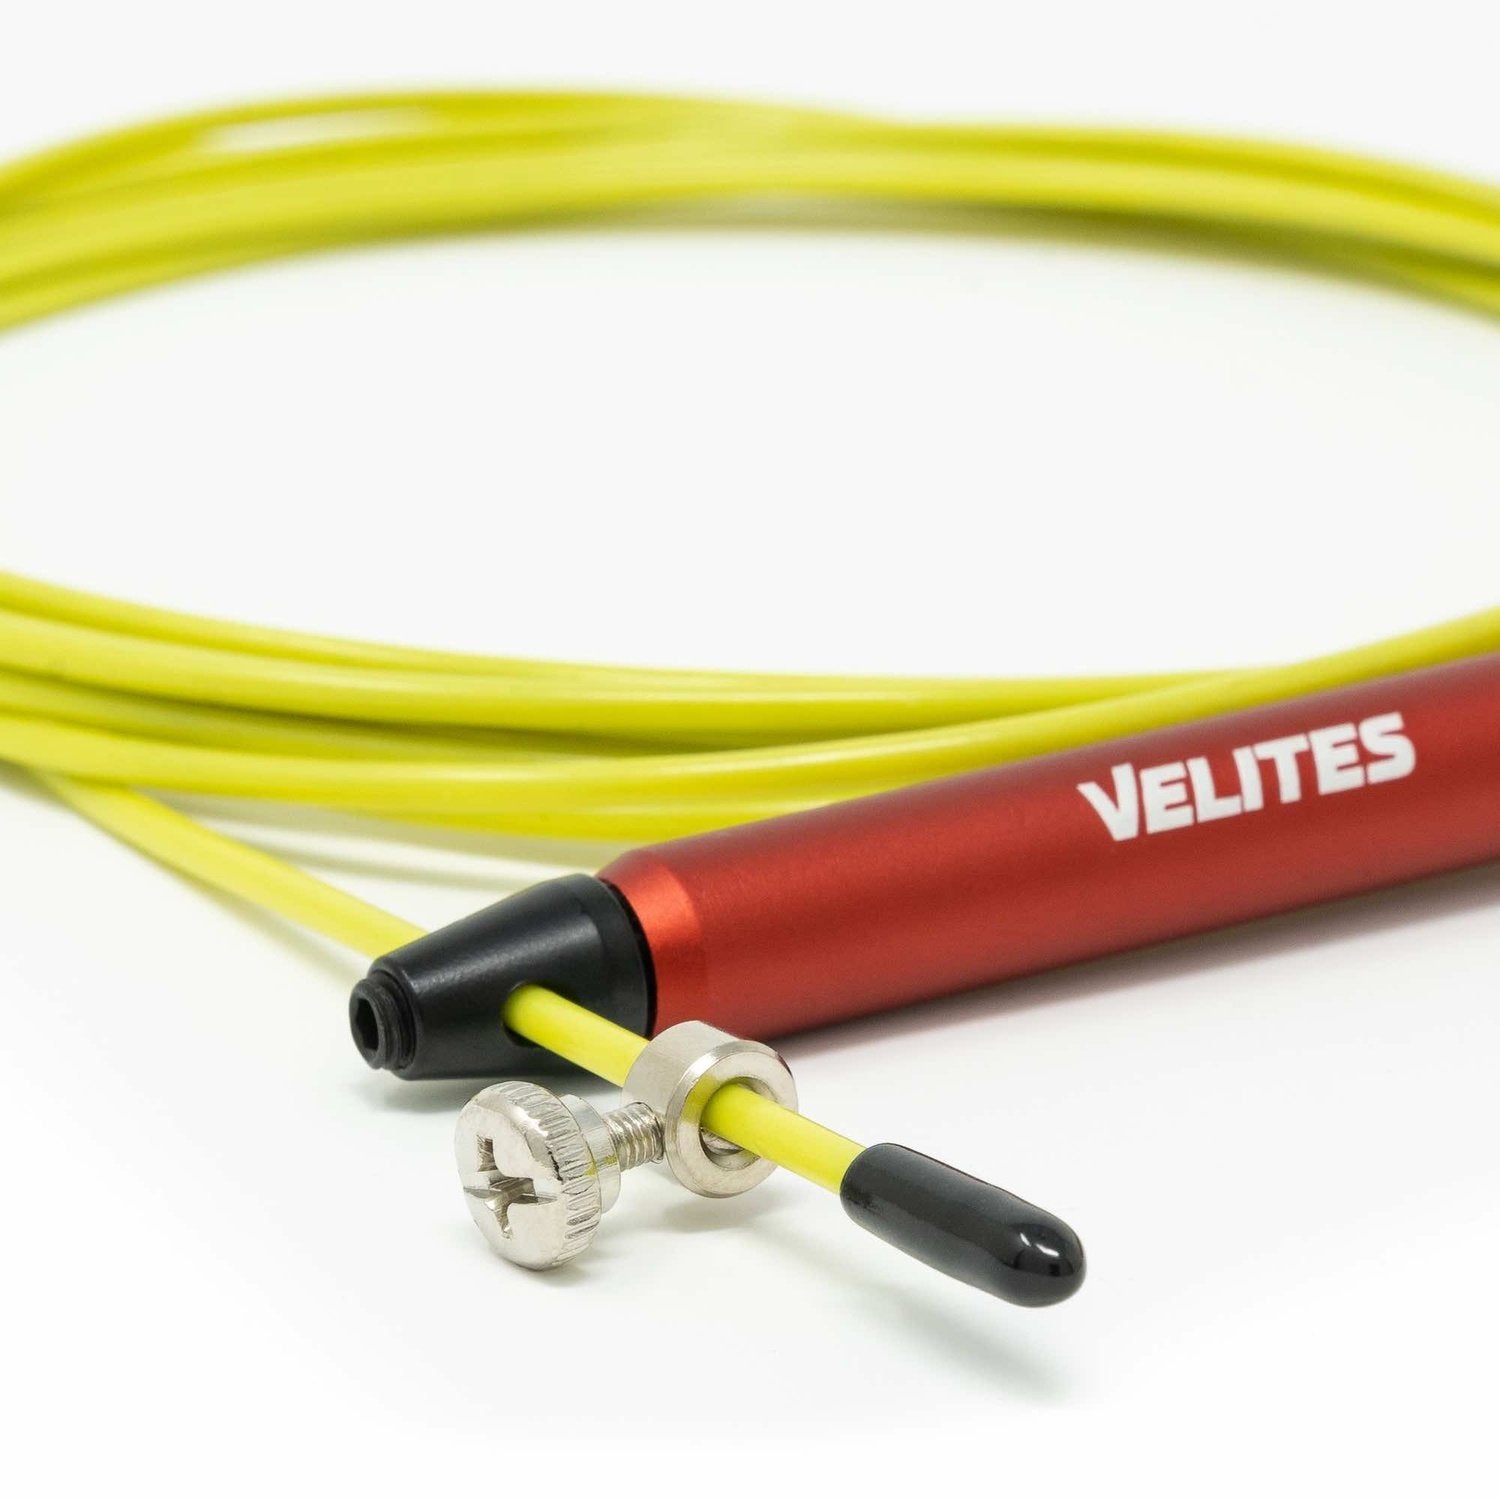 Velites Fire 2.0 Jump Rope (Wettkampfspringseil) Rot kaufen bei HighPowered.ch